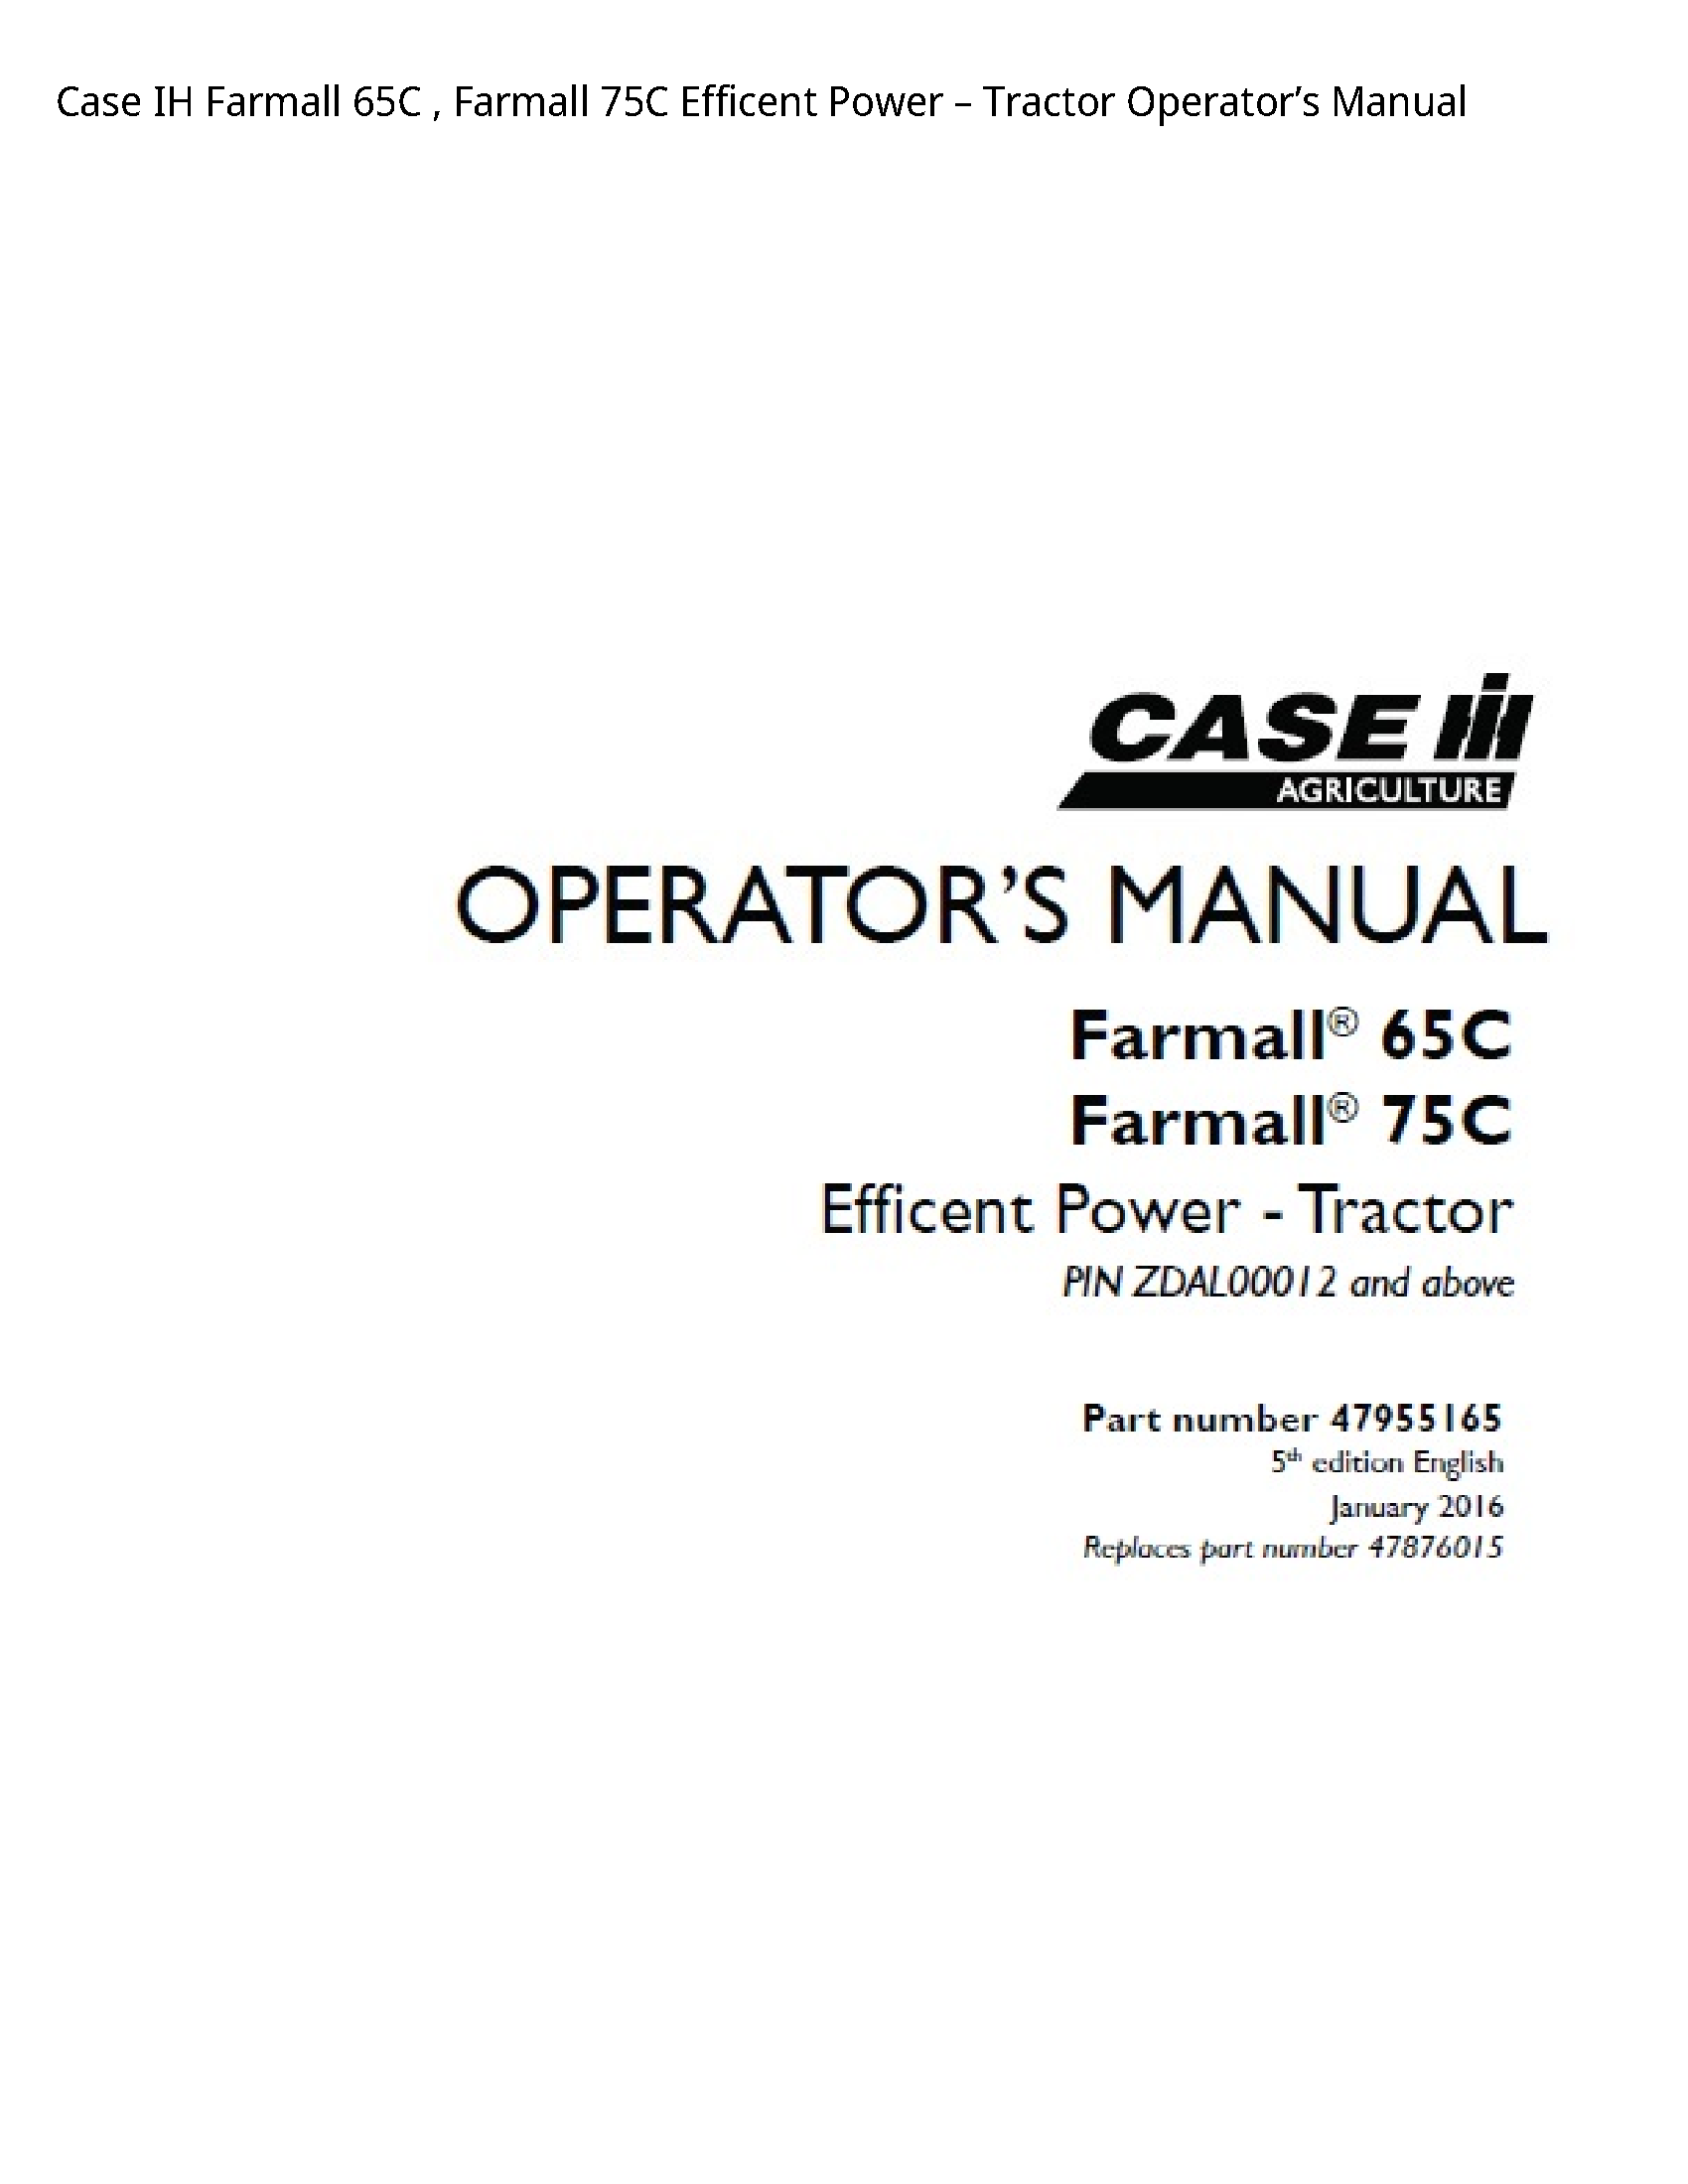 Case/Case IH 65C IH Farmall Farmall Efficent Power Tractor Operator’s manual